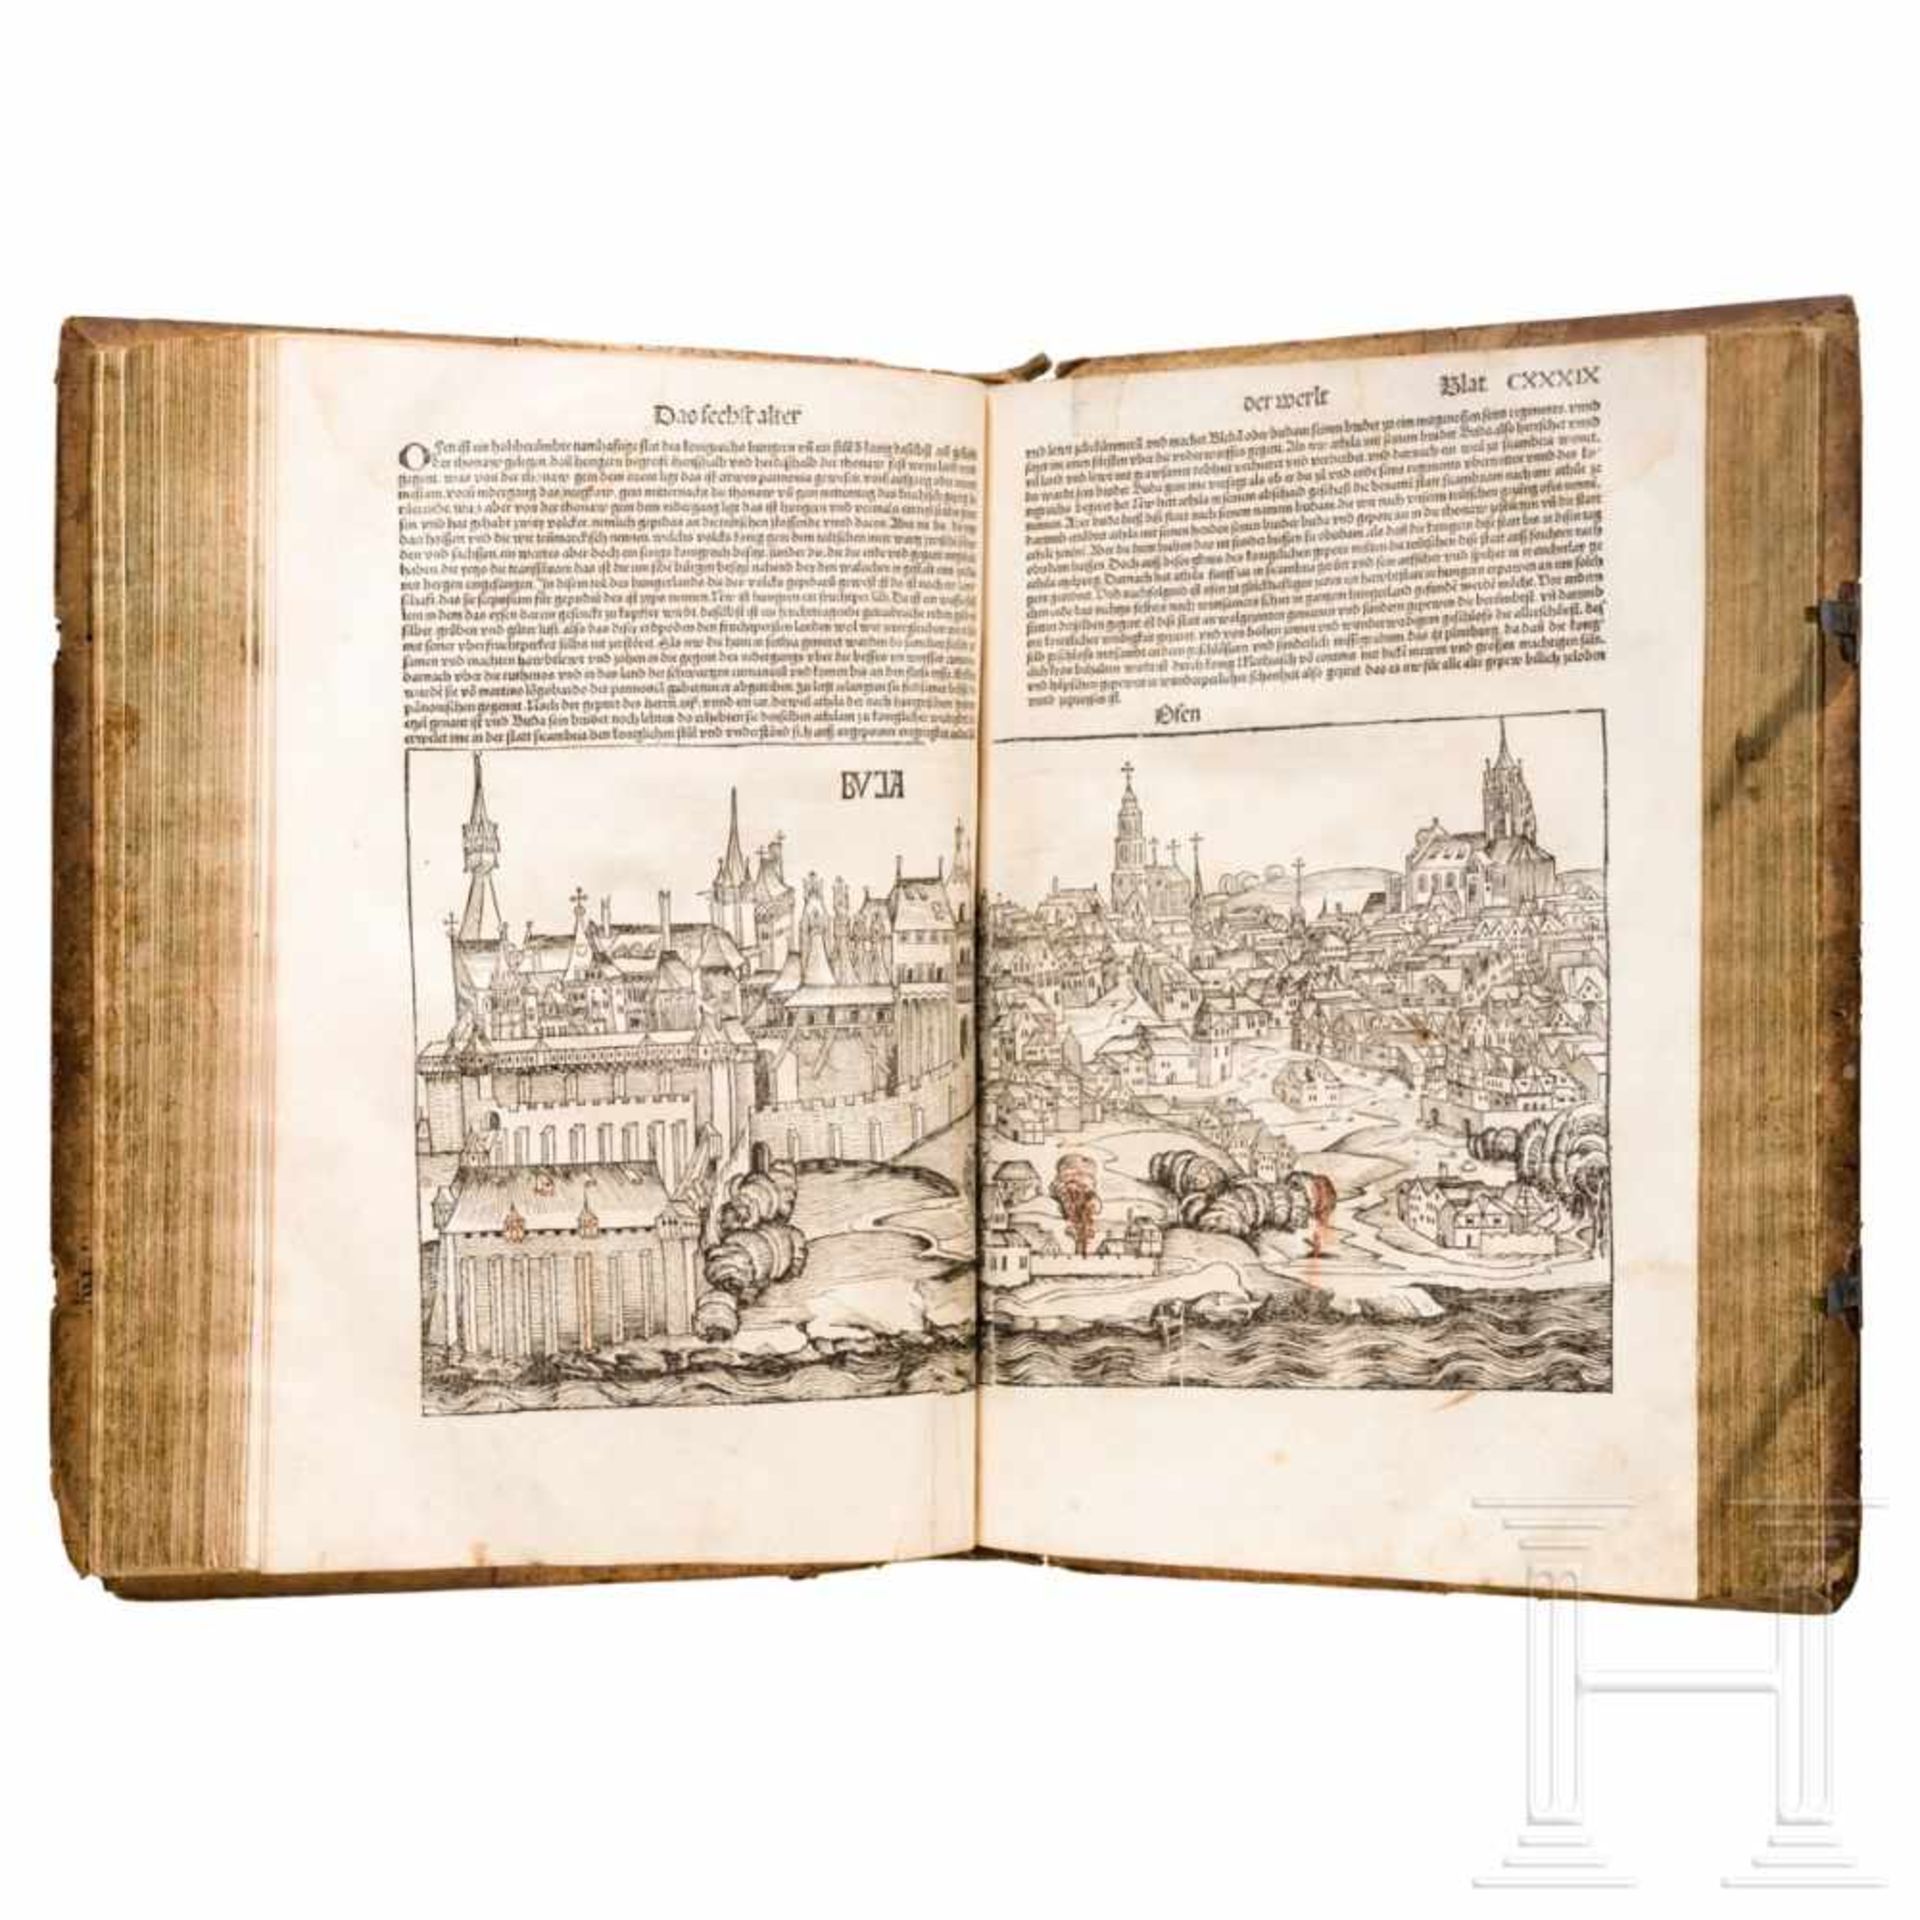 Hartmann Schedel, Das Buch der Chroniken, Nürnberg, A. Koberger, 1493 - Image 25 of 51